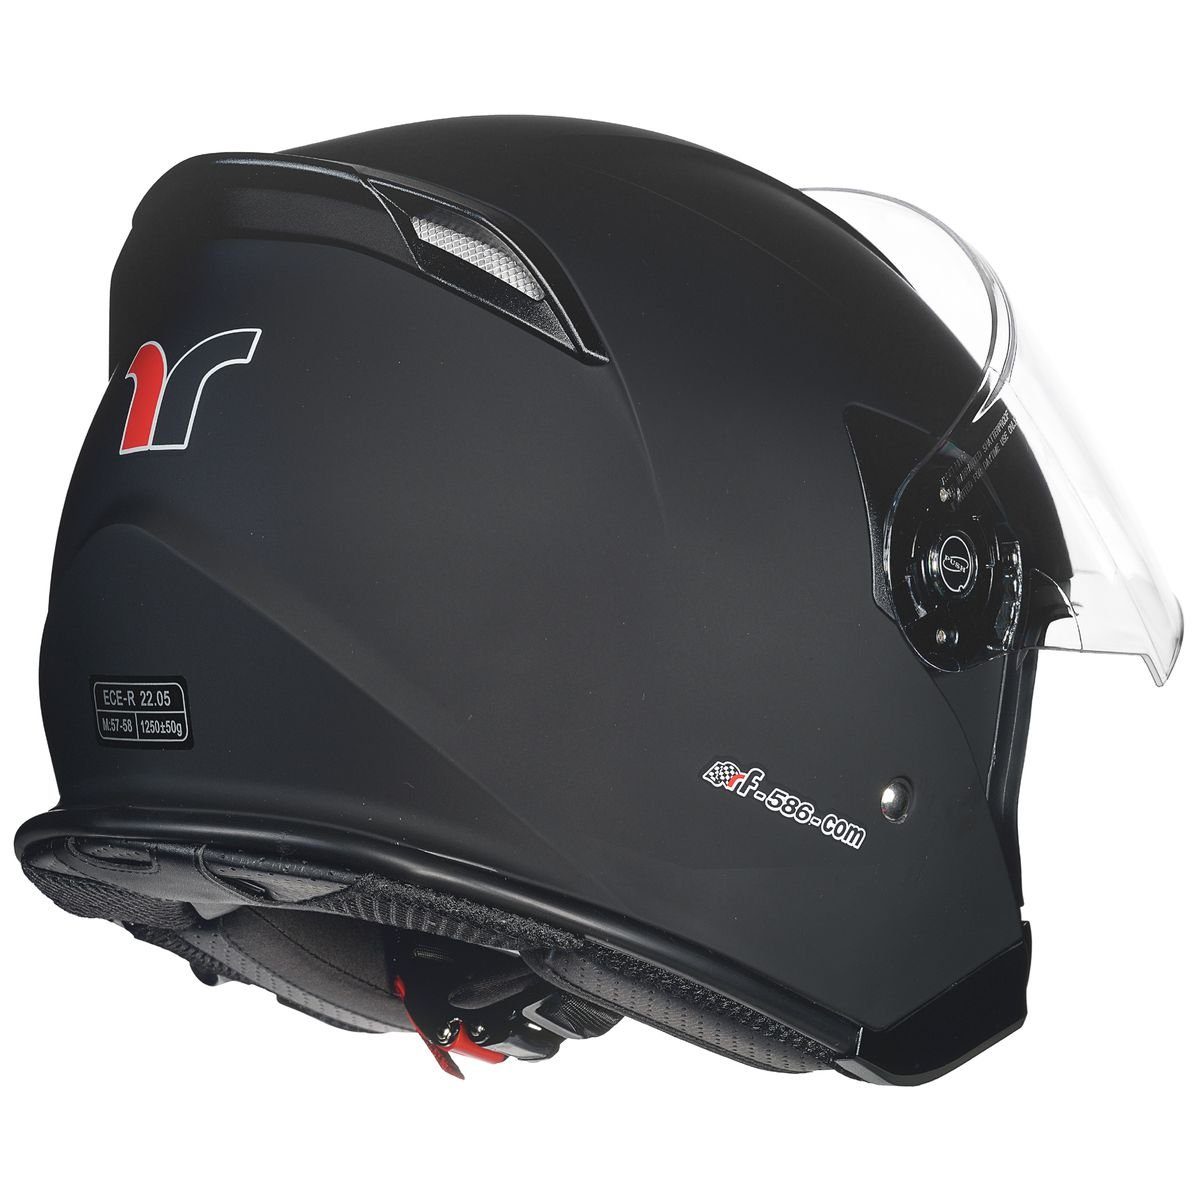 rueger-helmets Motorradhelm »Bluetooth Intercom Sprechanlage Headset T-Com  Klapphelm Jethelm Crosshem Integralhelm RF-586COM Matt Schwarz XS Jethelm«  online kaufen | OTTO